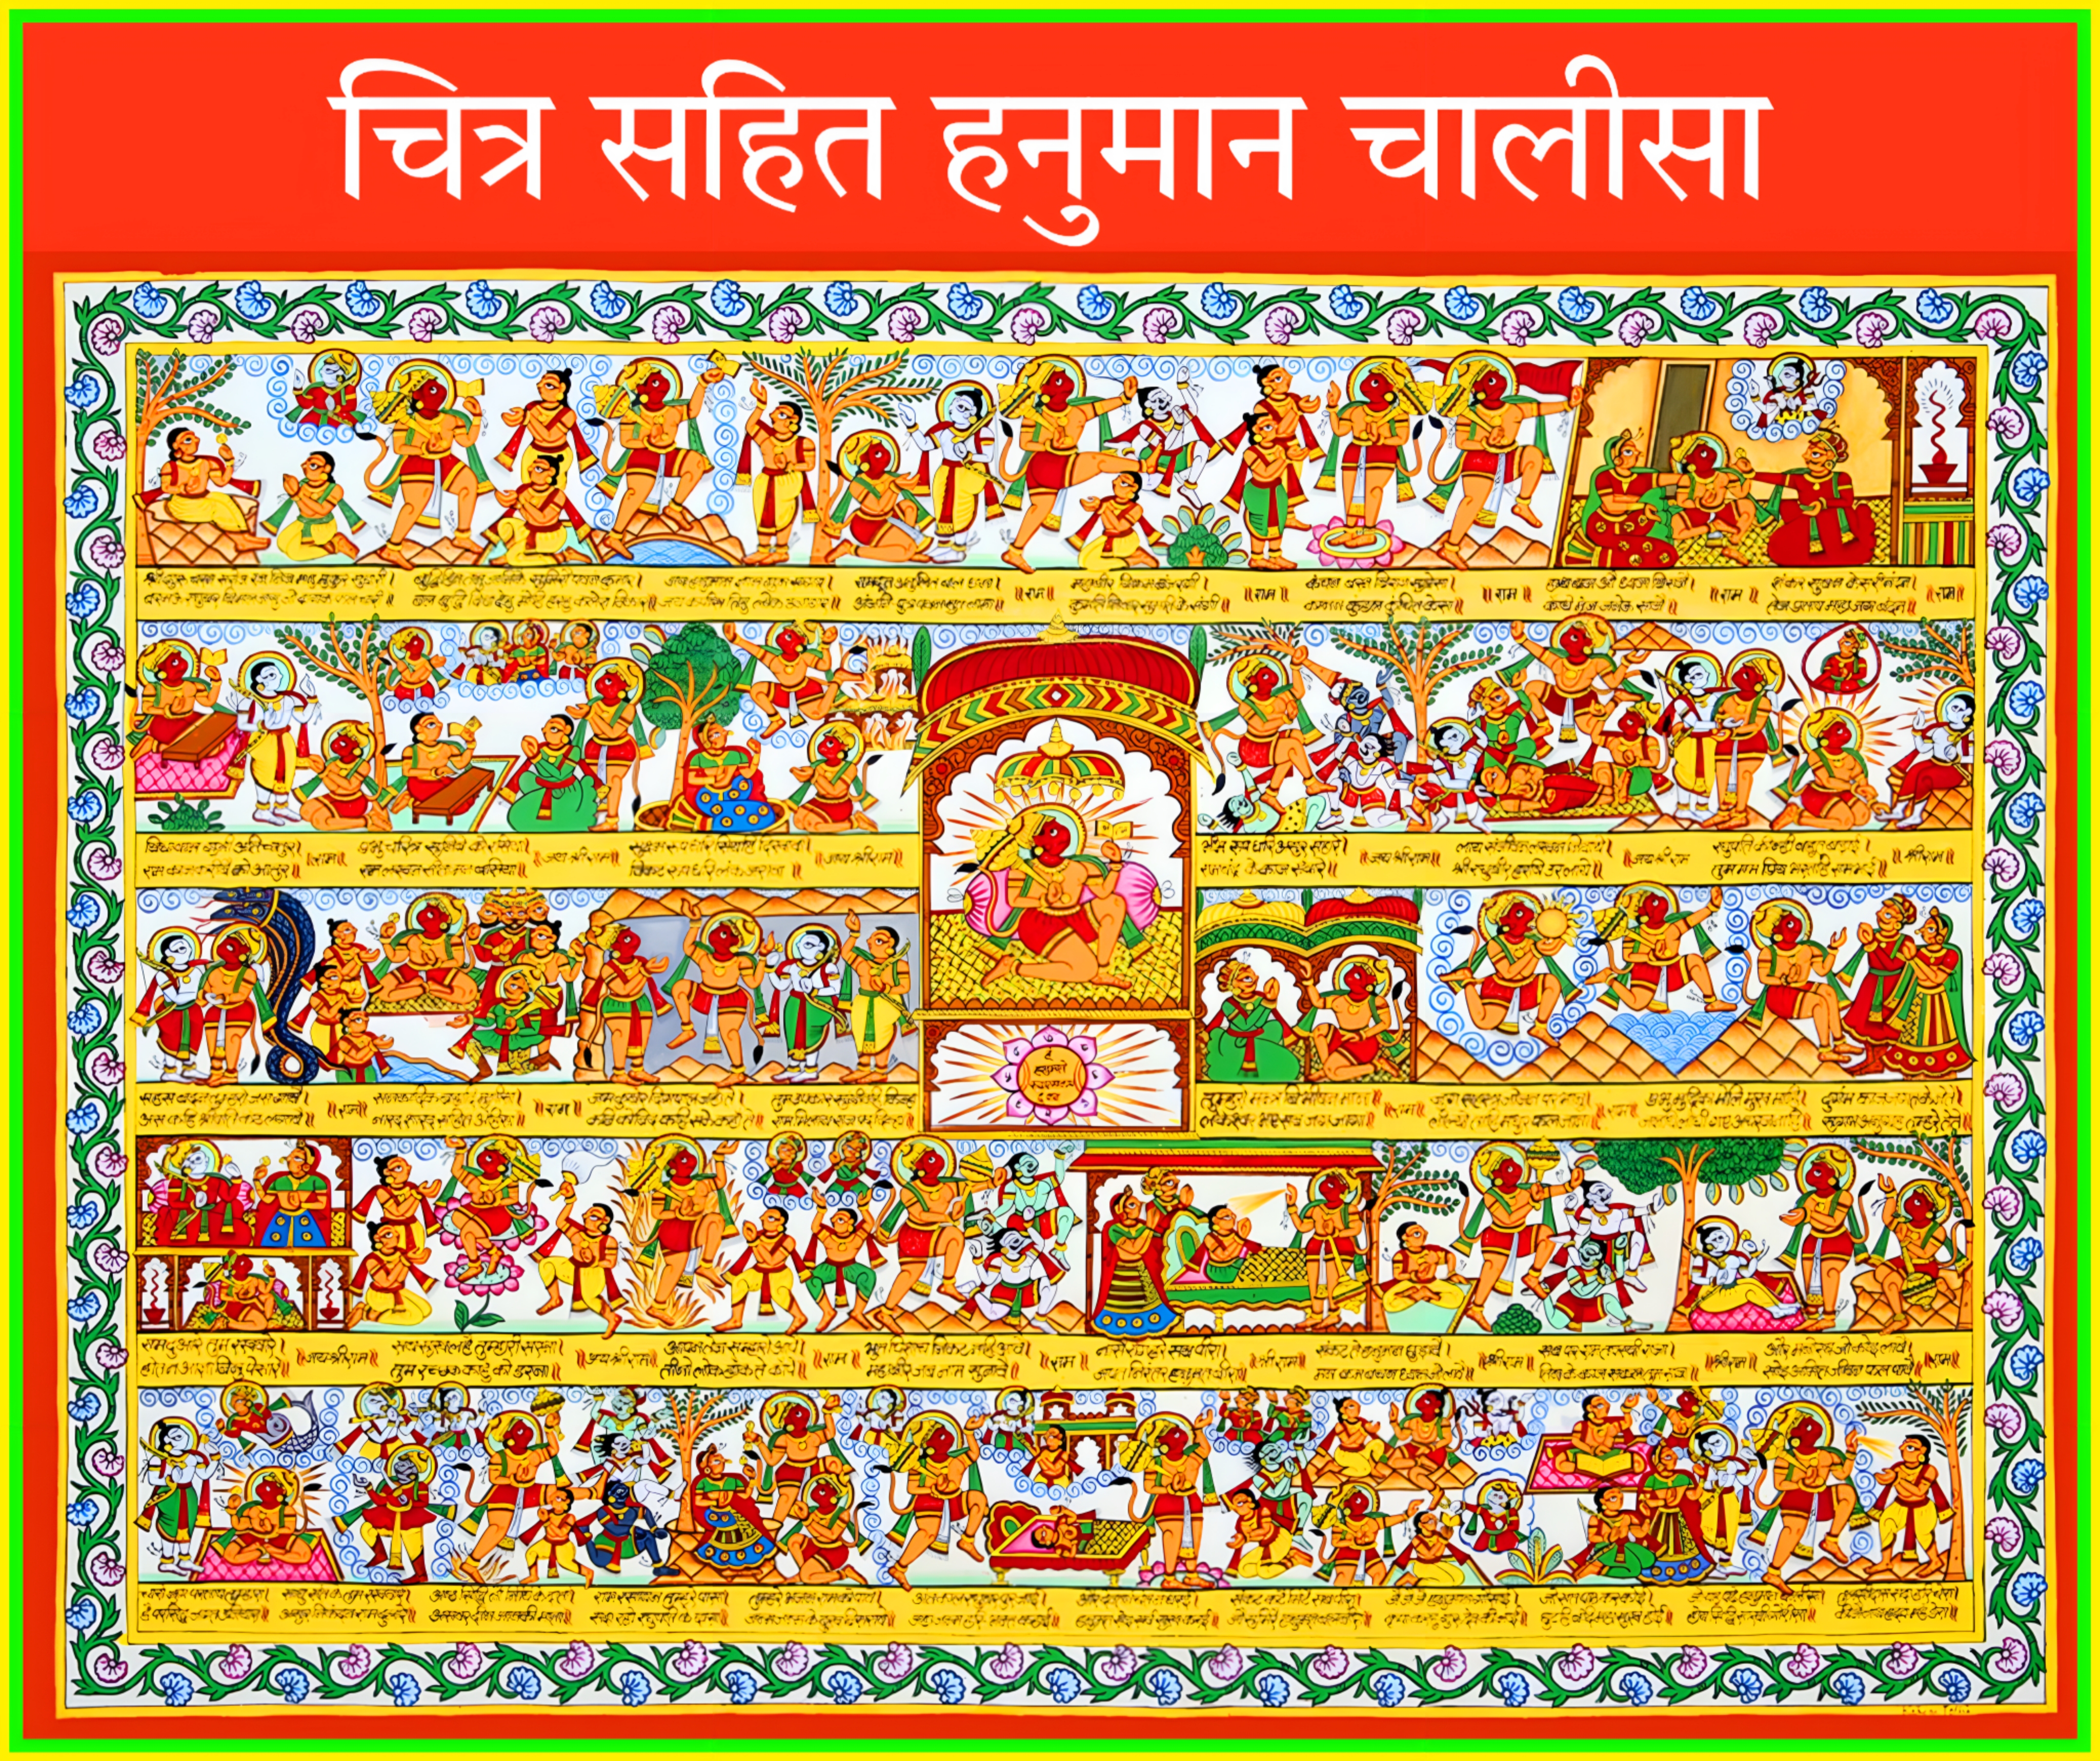 हनुमान चालीसा चित्र सहित | Hanuman Chalisa chitra sahit image photo